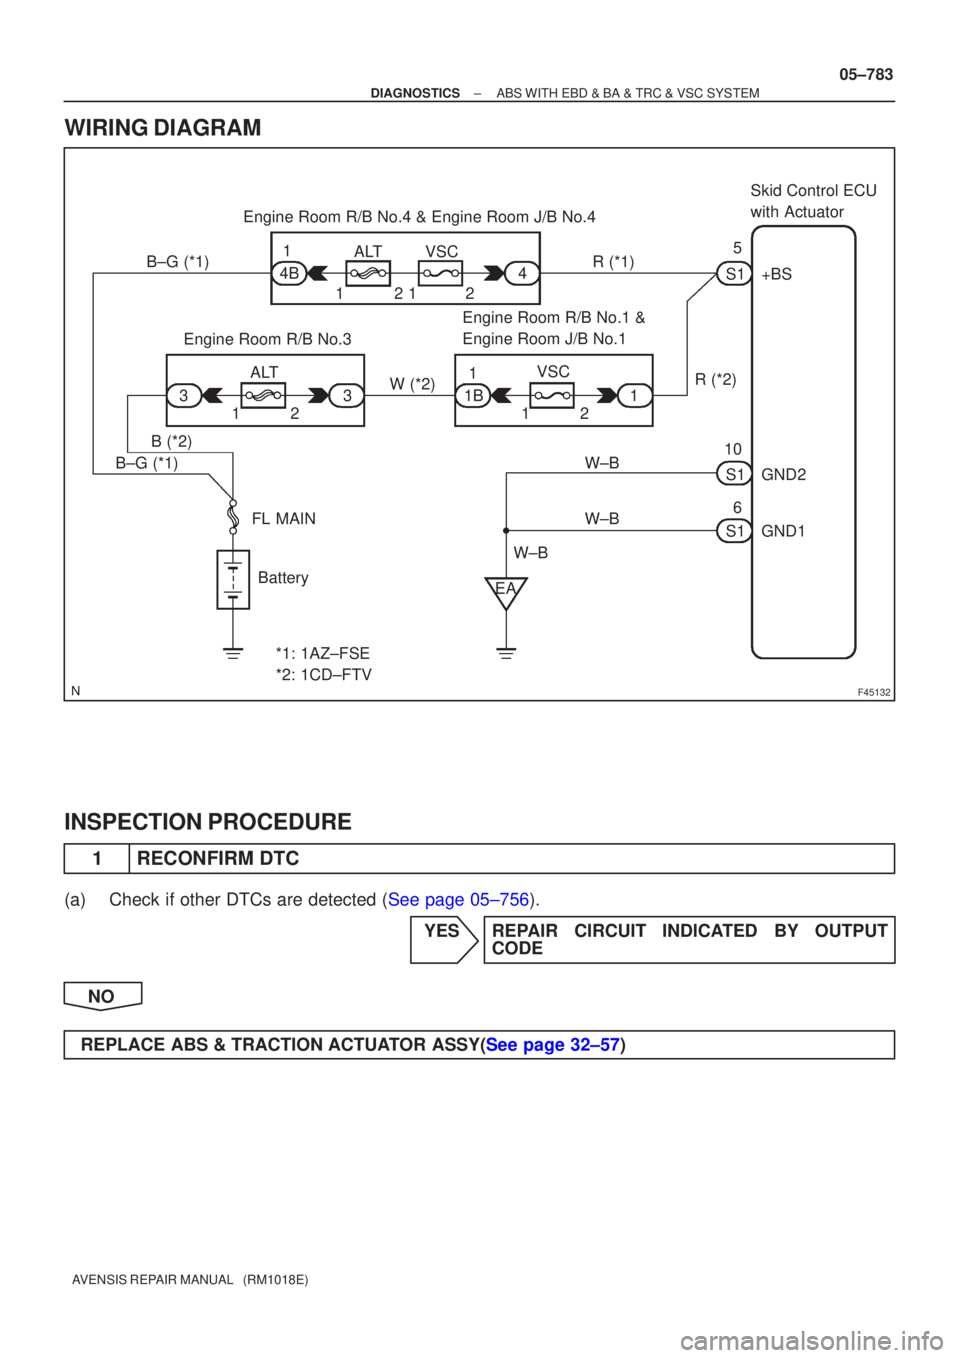 TOYOTA AVENSIS 2005  Service Repair Manual F45132
Battery
FL MAIN Skid Control ECU 
with Actuator
B±G (*1)R (*1) 1
ALTVSC
Engine Room R/B No.4 & Engine Room J/B No.4
1
4B
W±BS1
S1
10 5
+BS
12
1
2
GND1 GND2
S1 6
W±B W±B
*1: 1AZ±FSE 
*2: 1C